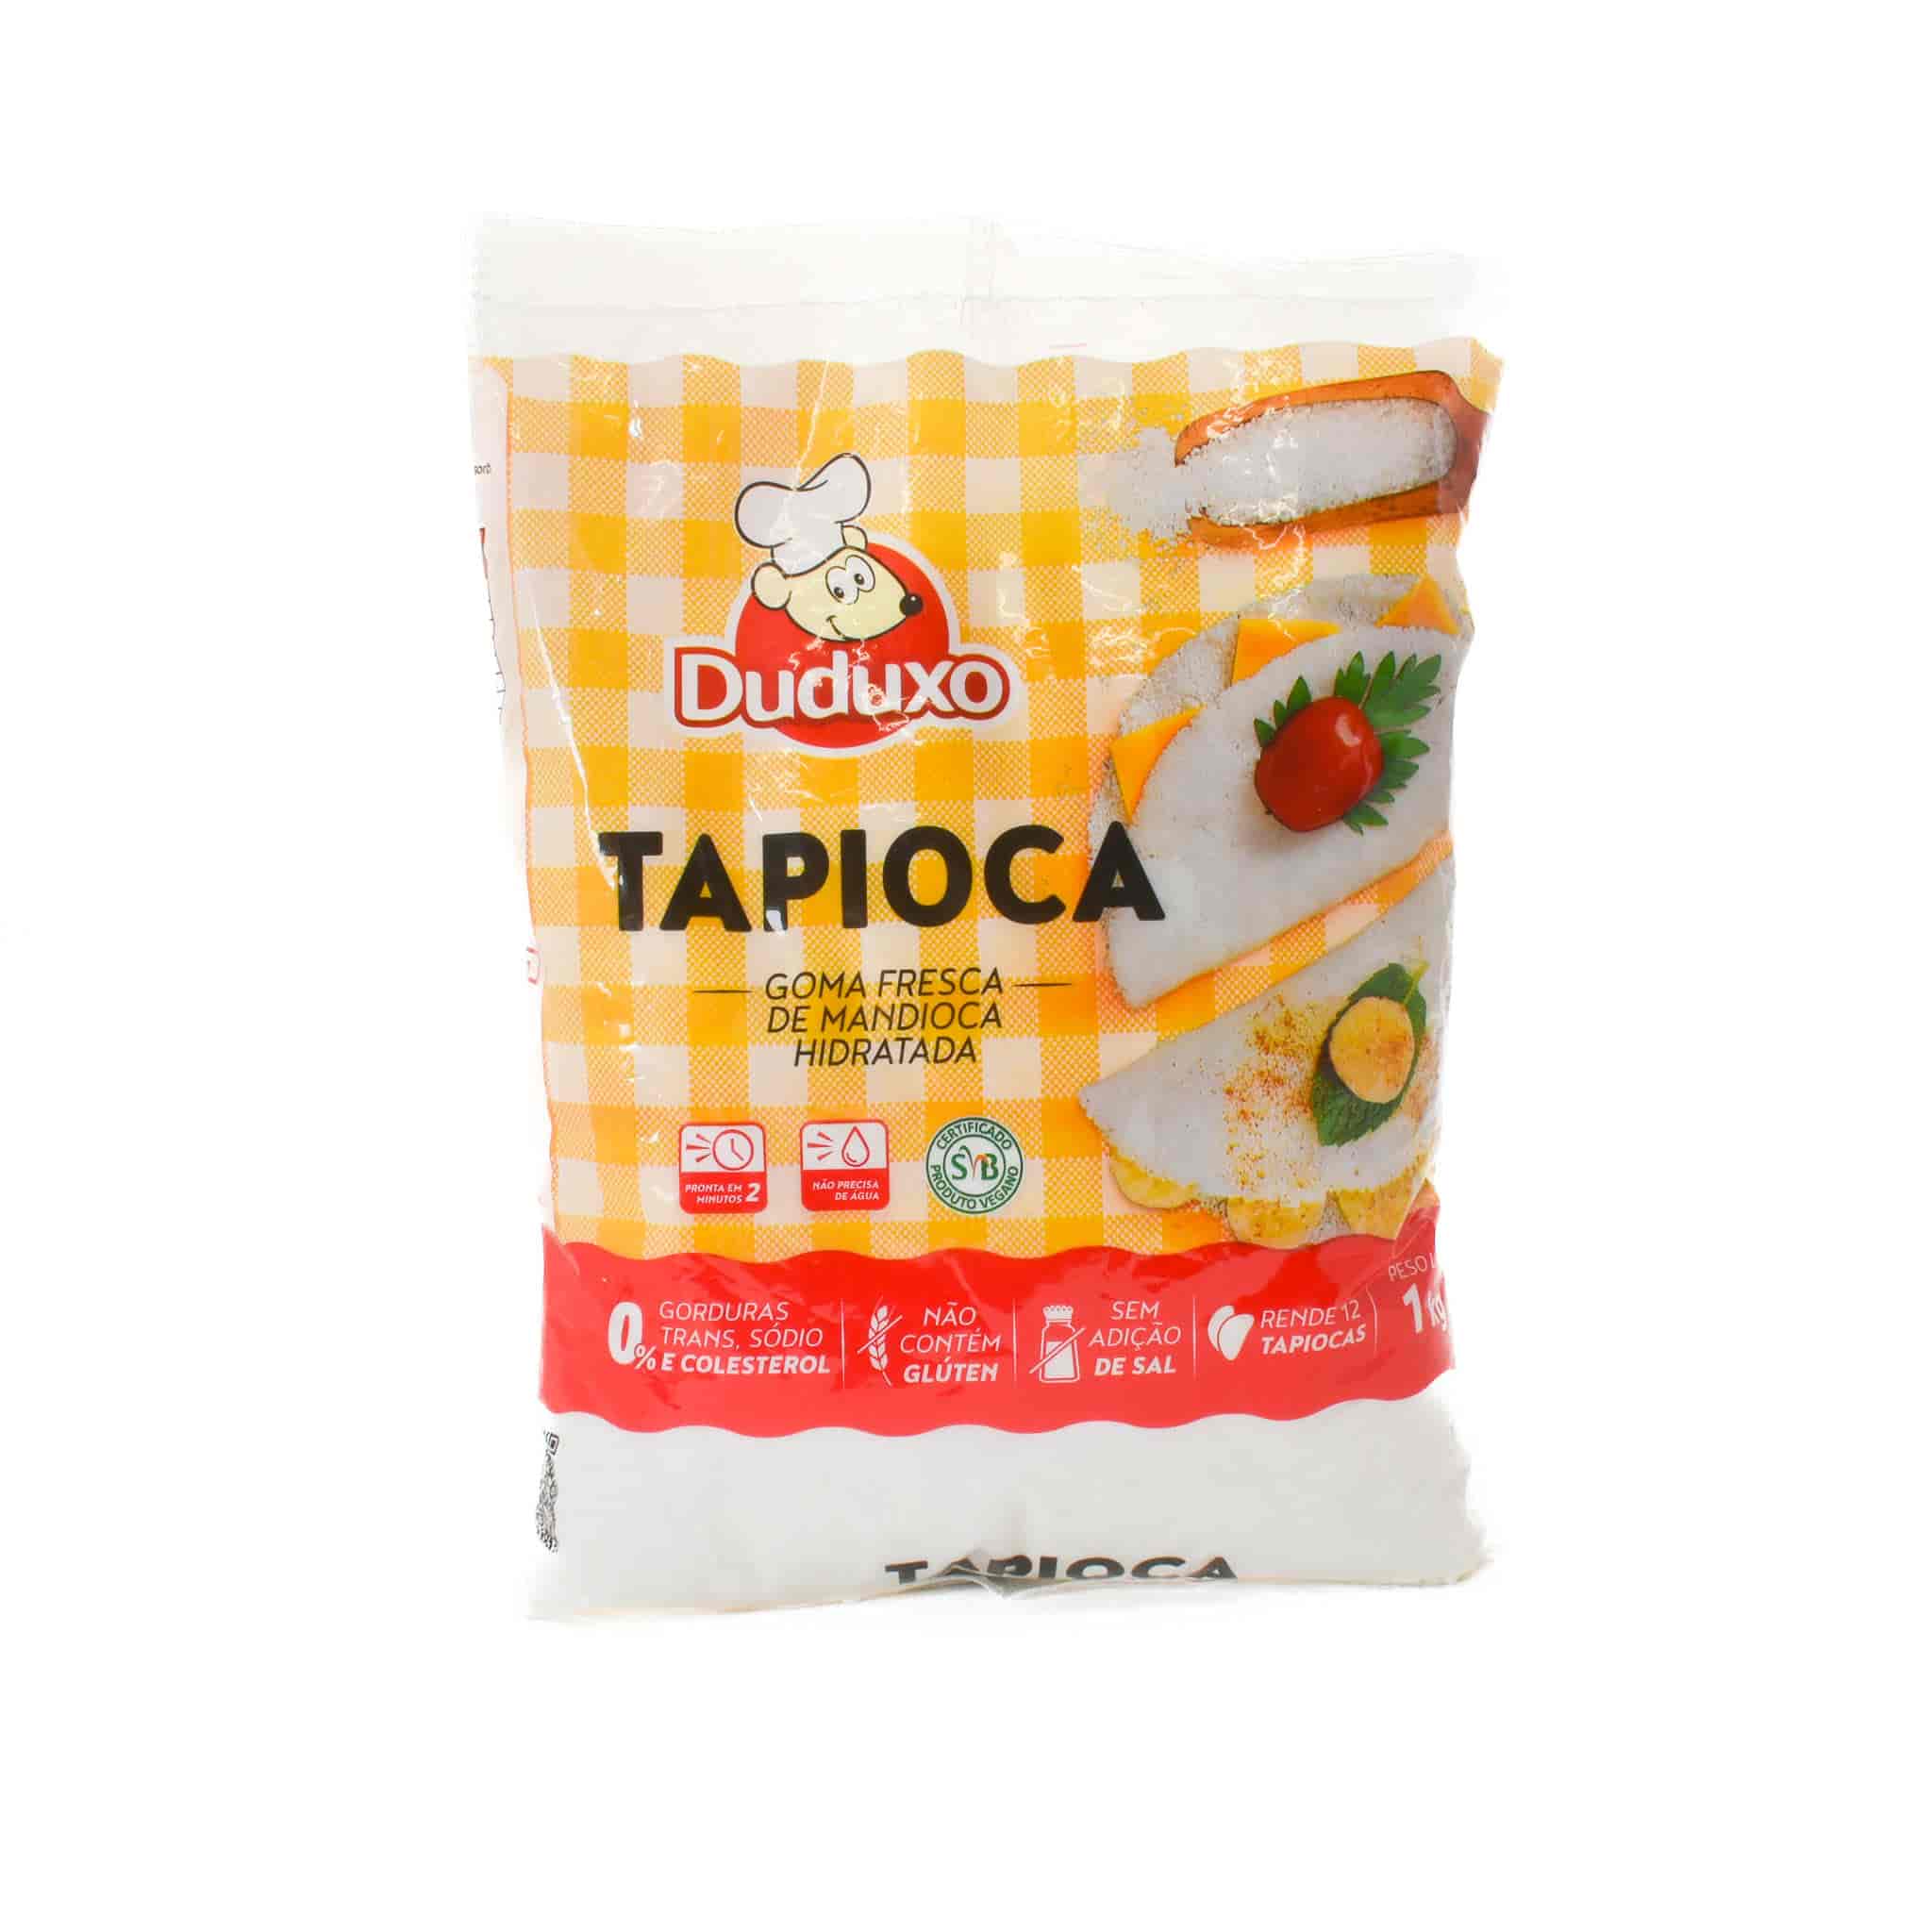 Duduxo Hydrated Tapioca 1kg